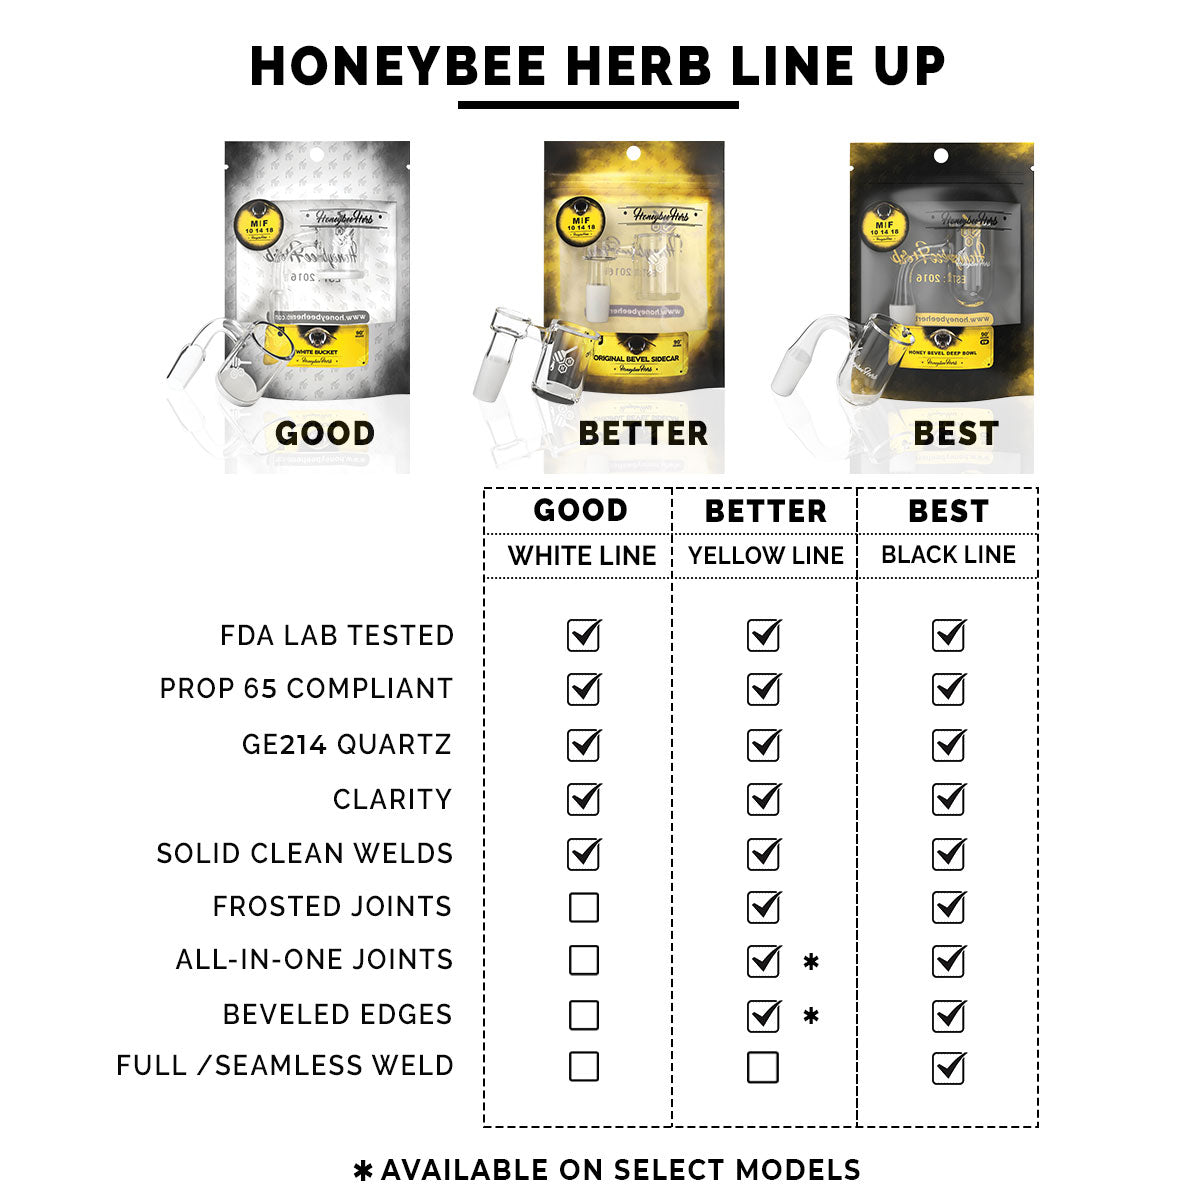 Honeybee Herb Quartz Banger Quality Chart, comparing Good, Better, Best product lines